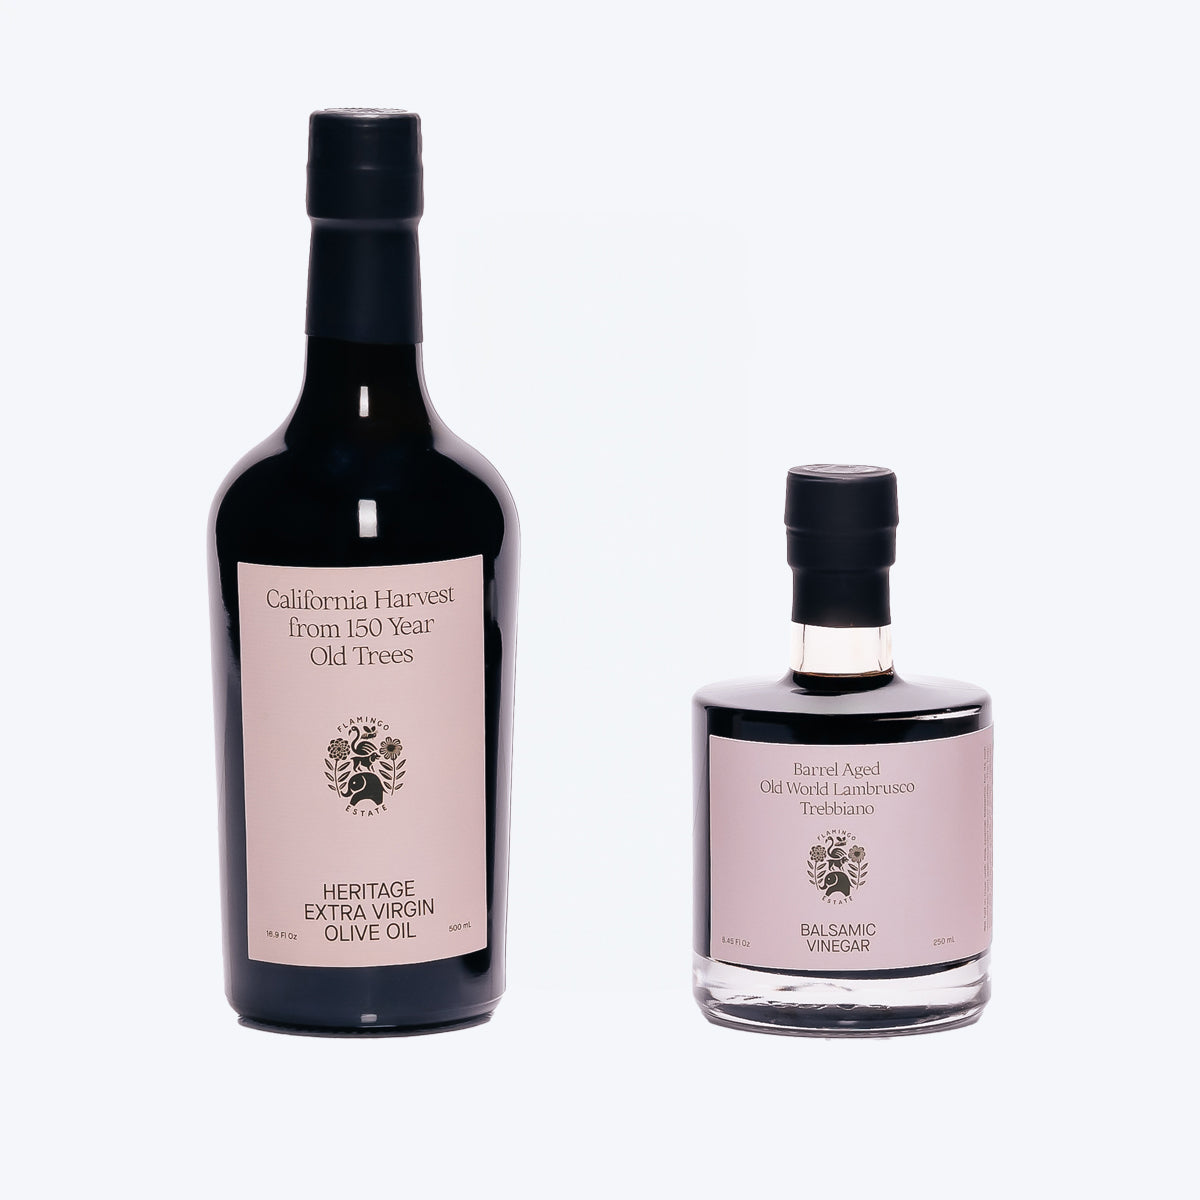 Olive oil and balsamic vinegar set from Flamingo Estate